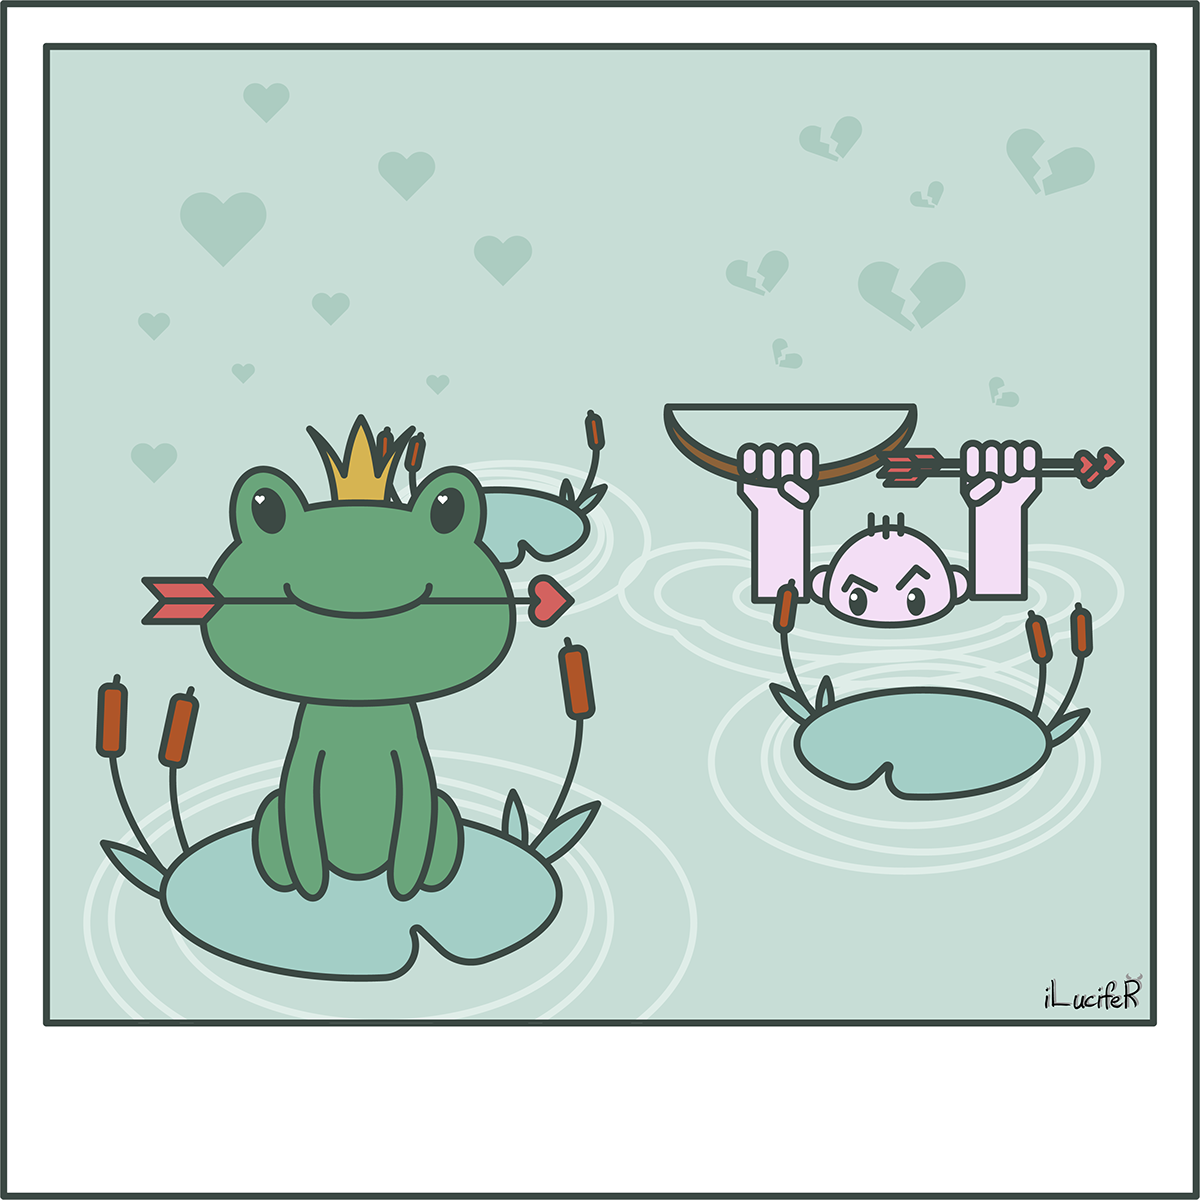 frog iLucifeŘ cupid okCupid Love Broken heart arrow Princess swarm cartoon